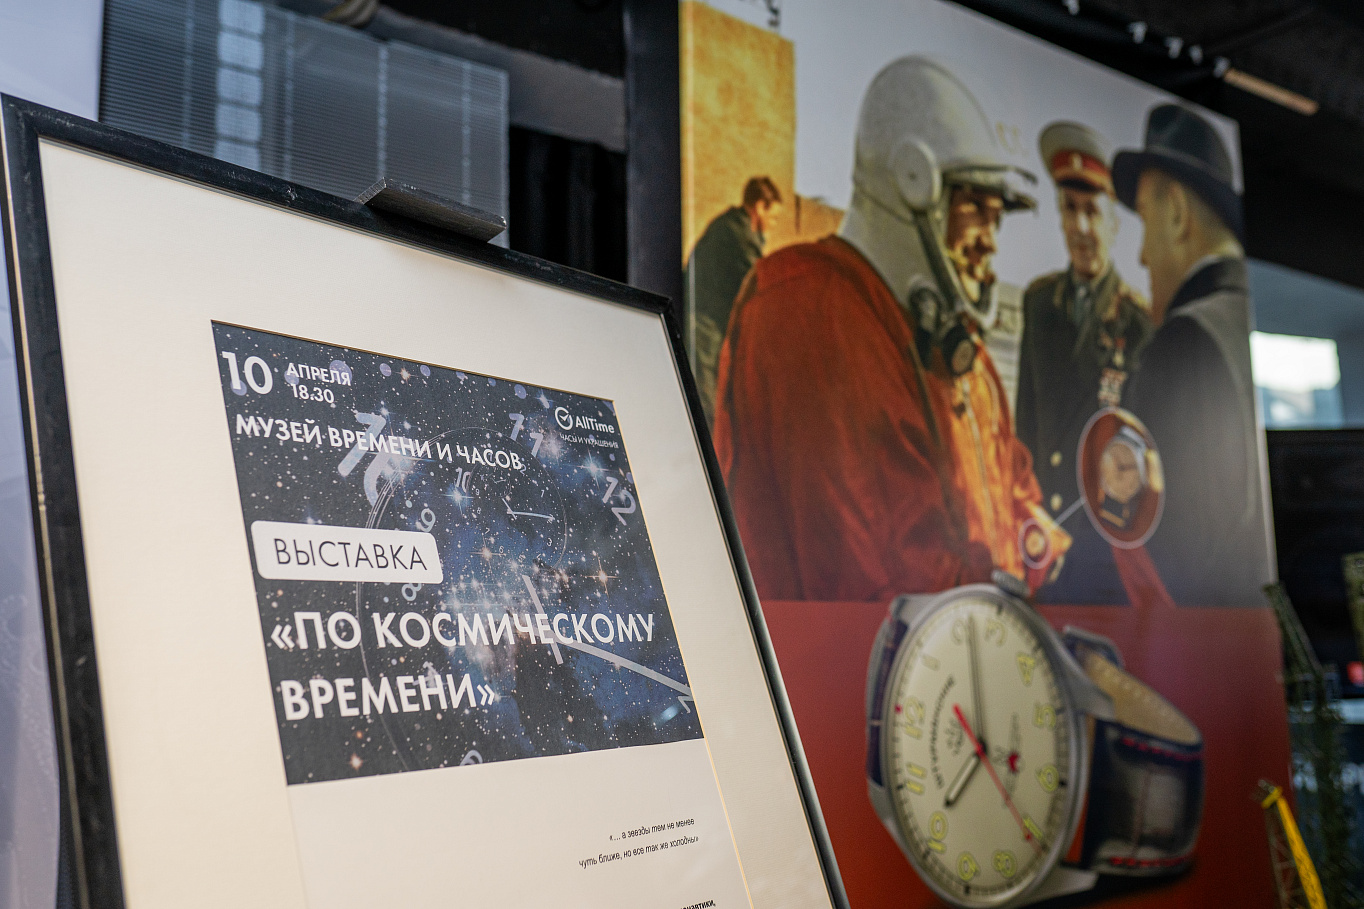 Konstantin Chaykin watches at the Cosmonautics Day Exhibition